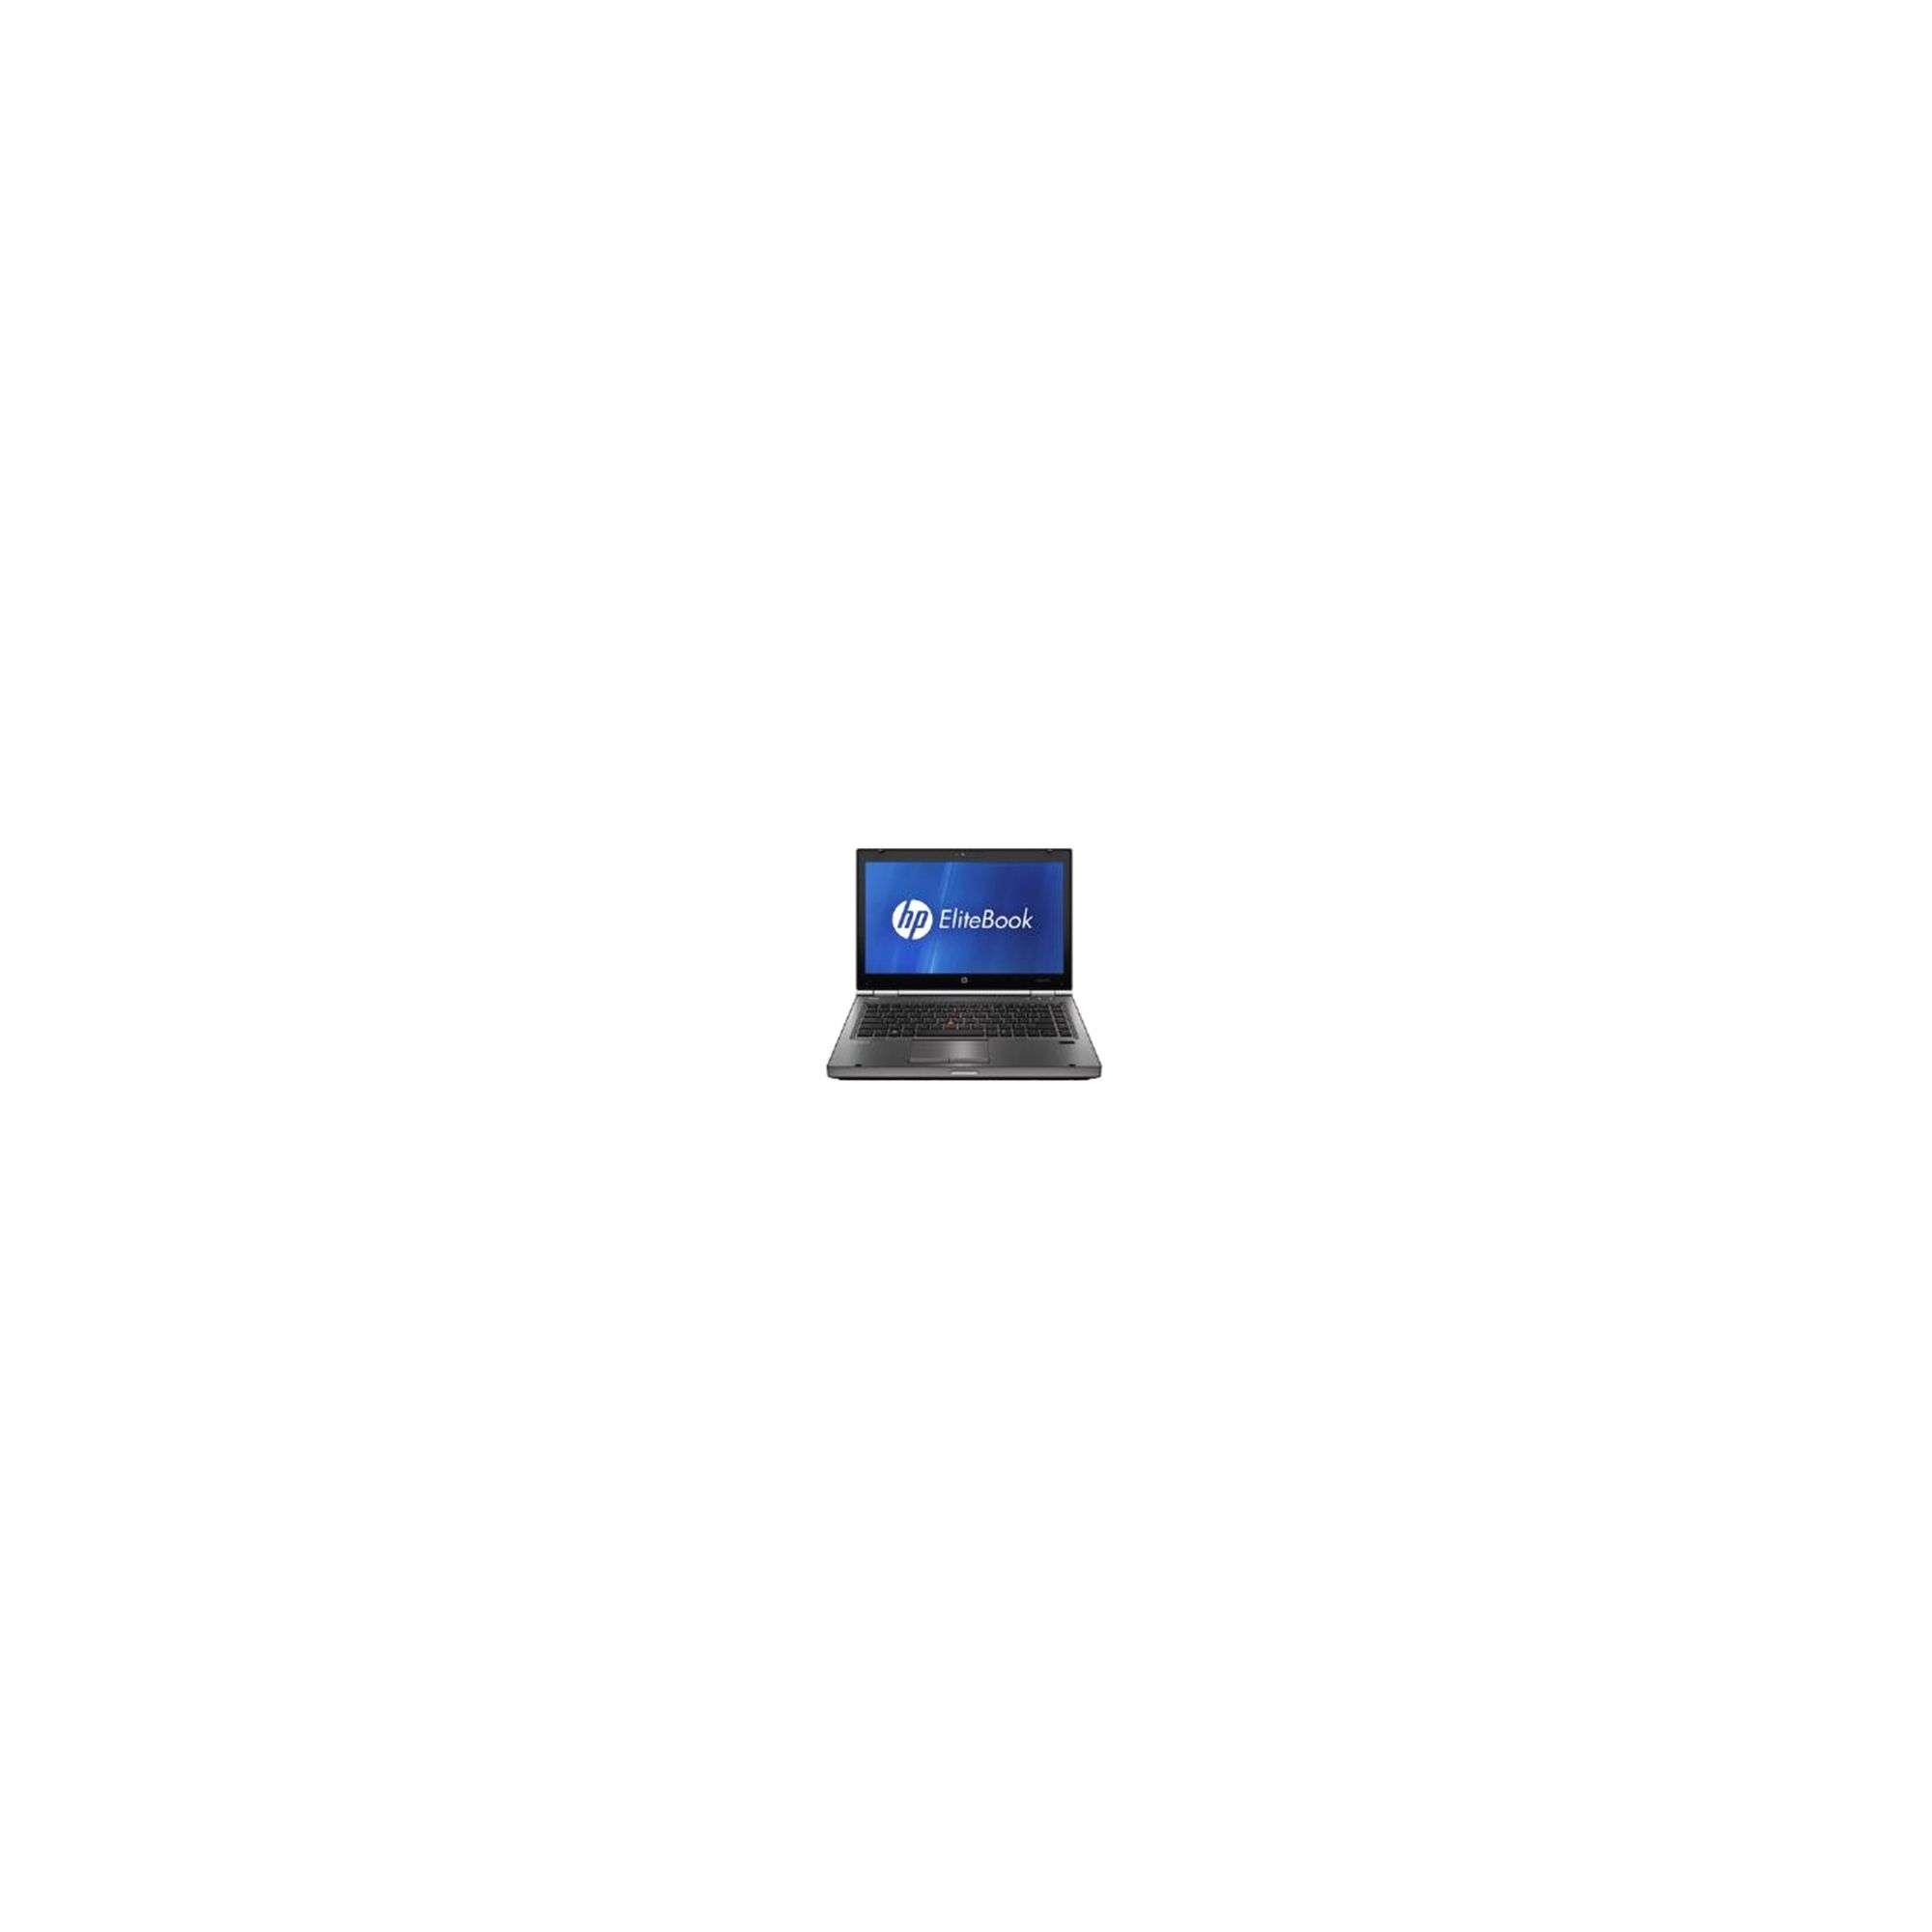 HP EliteBook 8470w Mobile Workstation Core i7 (3630QM) 2.4GHz 4GB 750GB DVD±RW SM DL WLAN BT Webcam Windows 7 Pro 64-bit+Windows 8 Pro Licence of 10